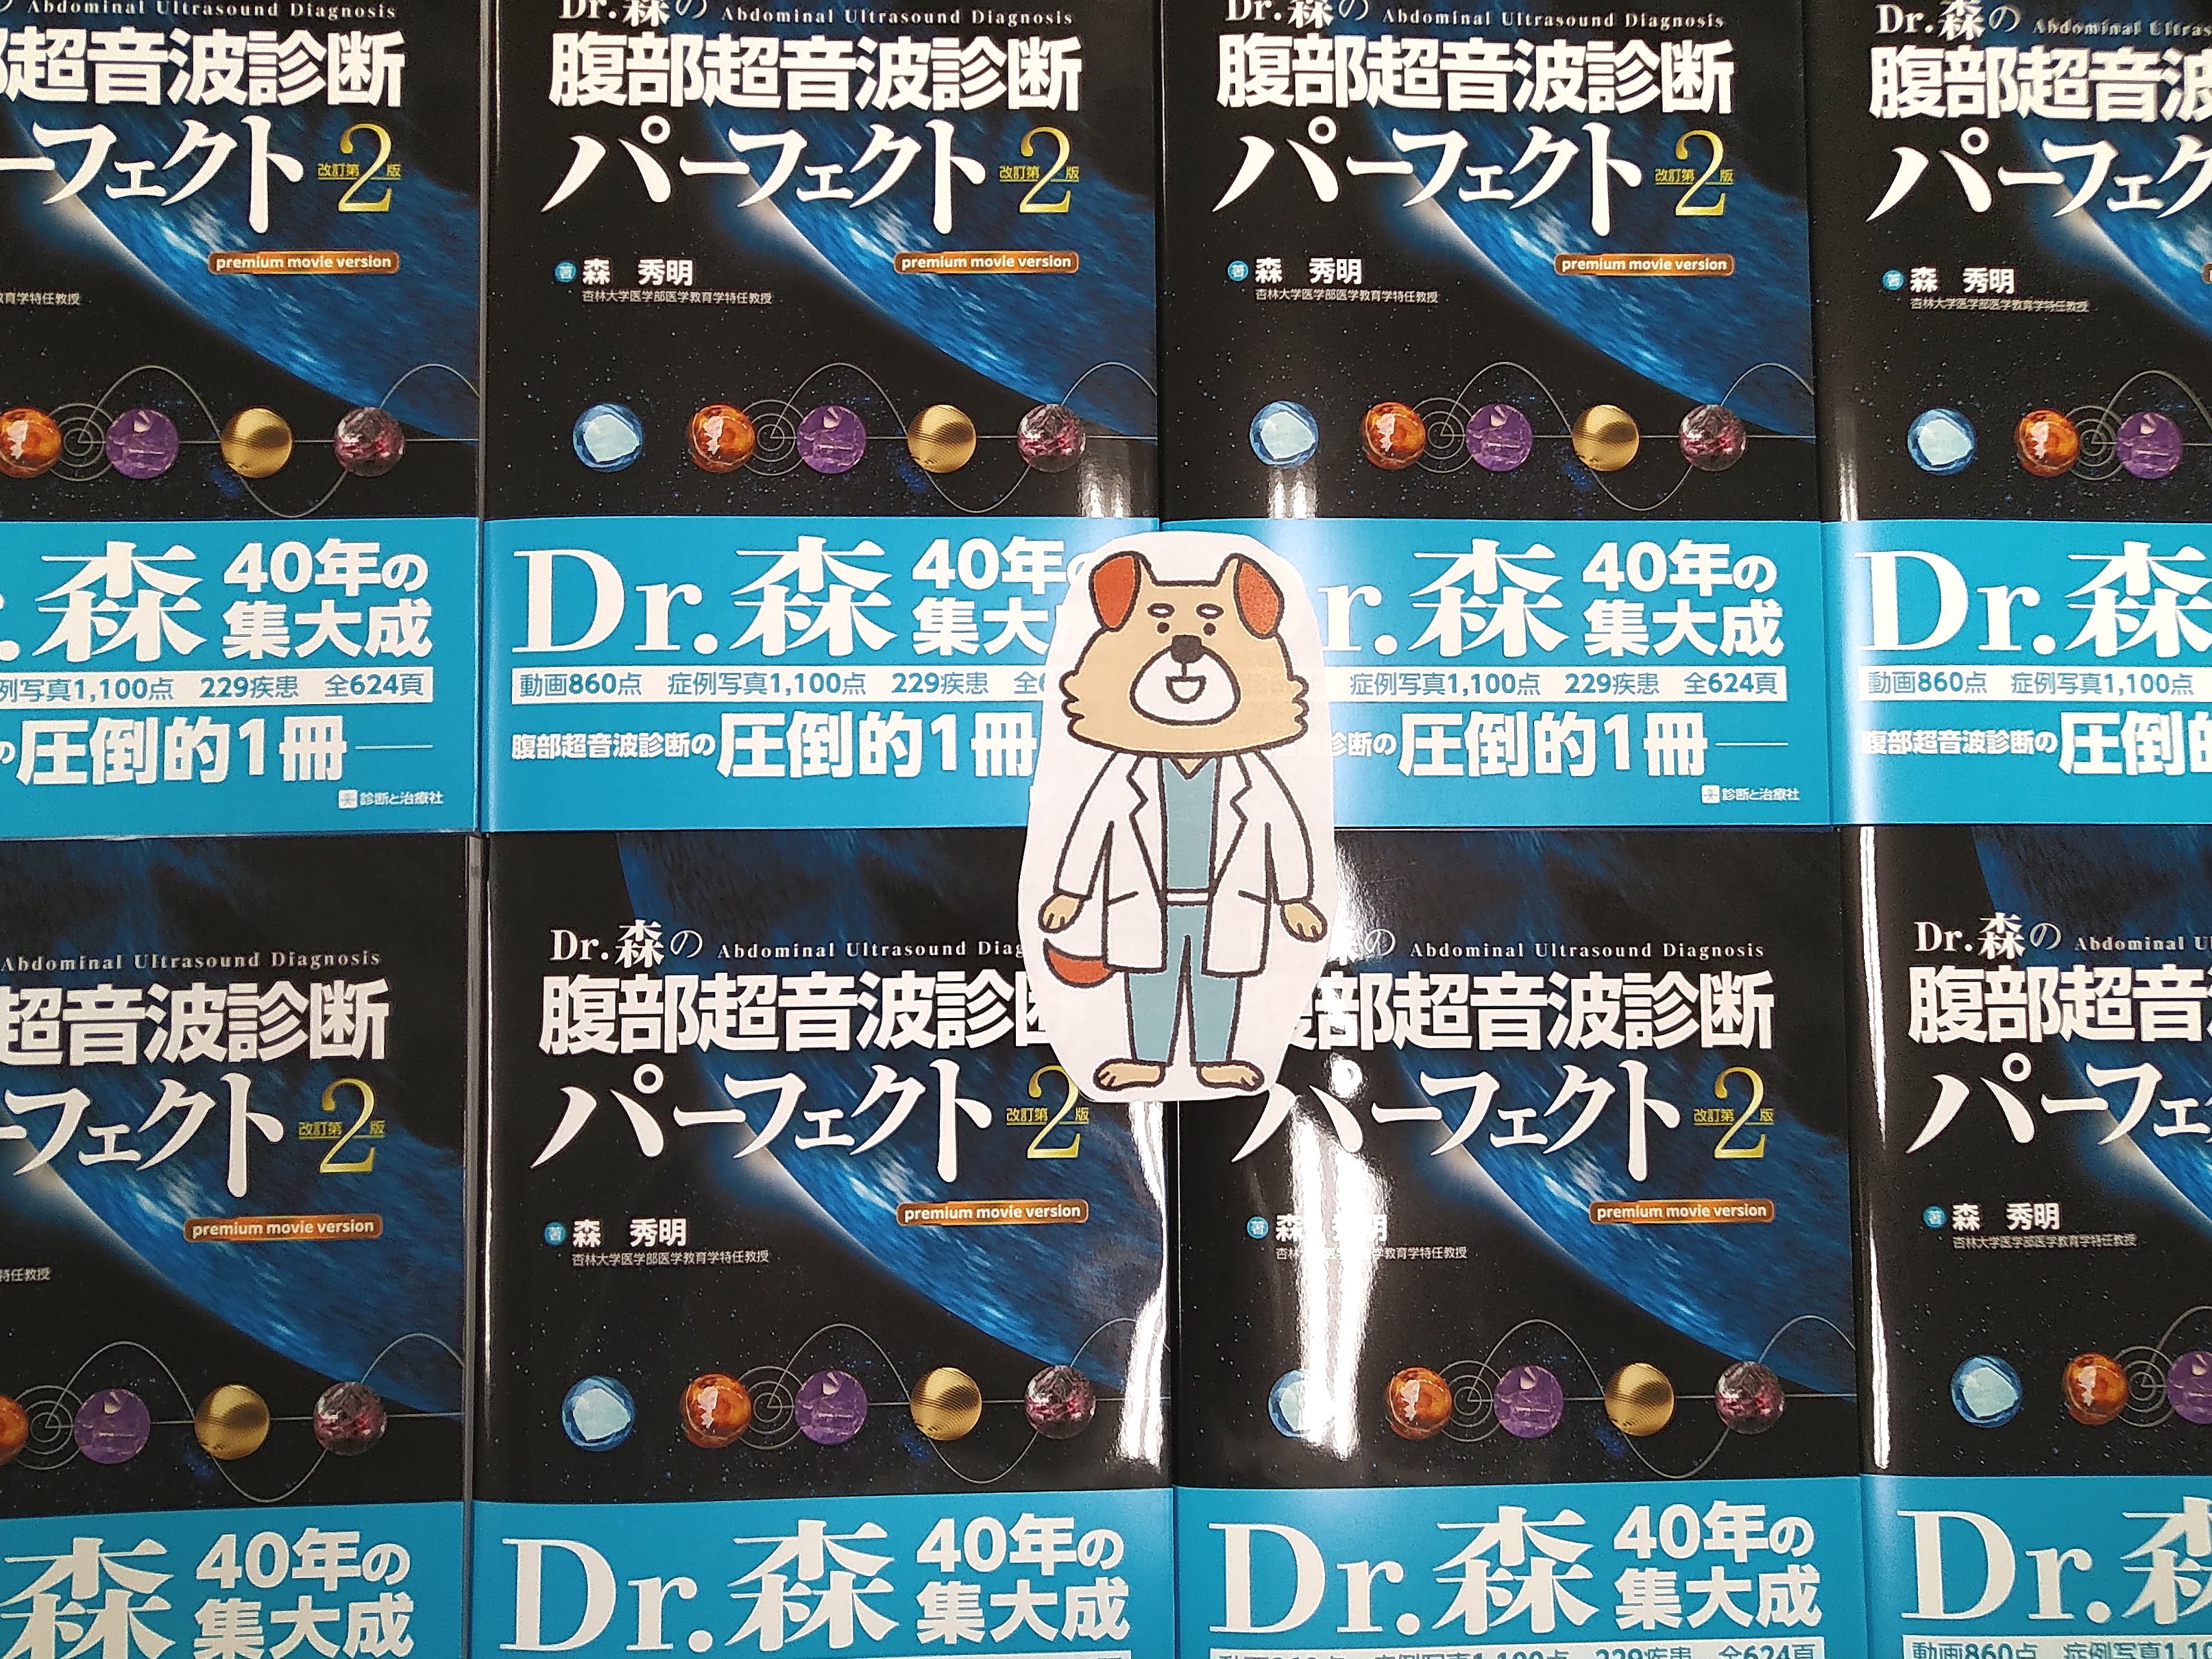 Dr.森の腹部超音波診断パーフェクト 改訂第2版 【裁断済み】